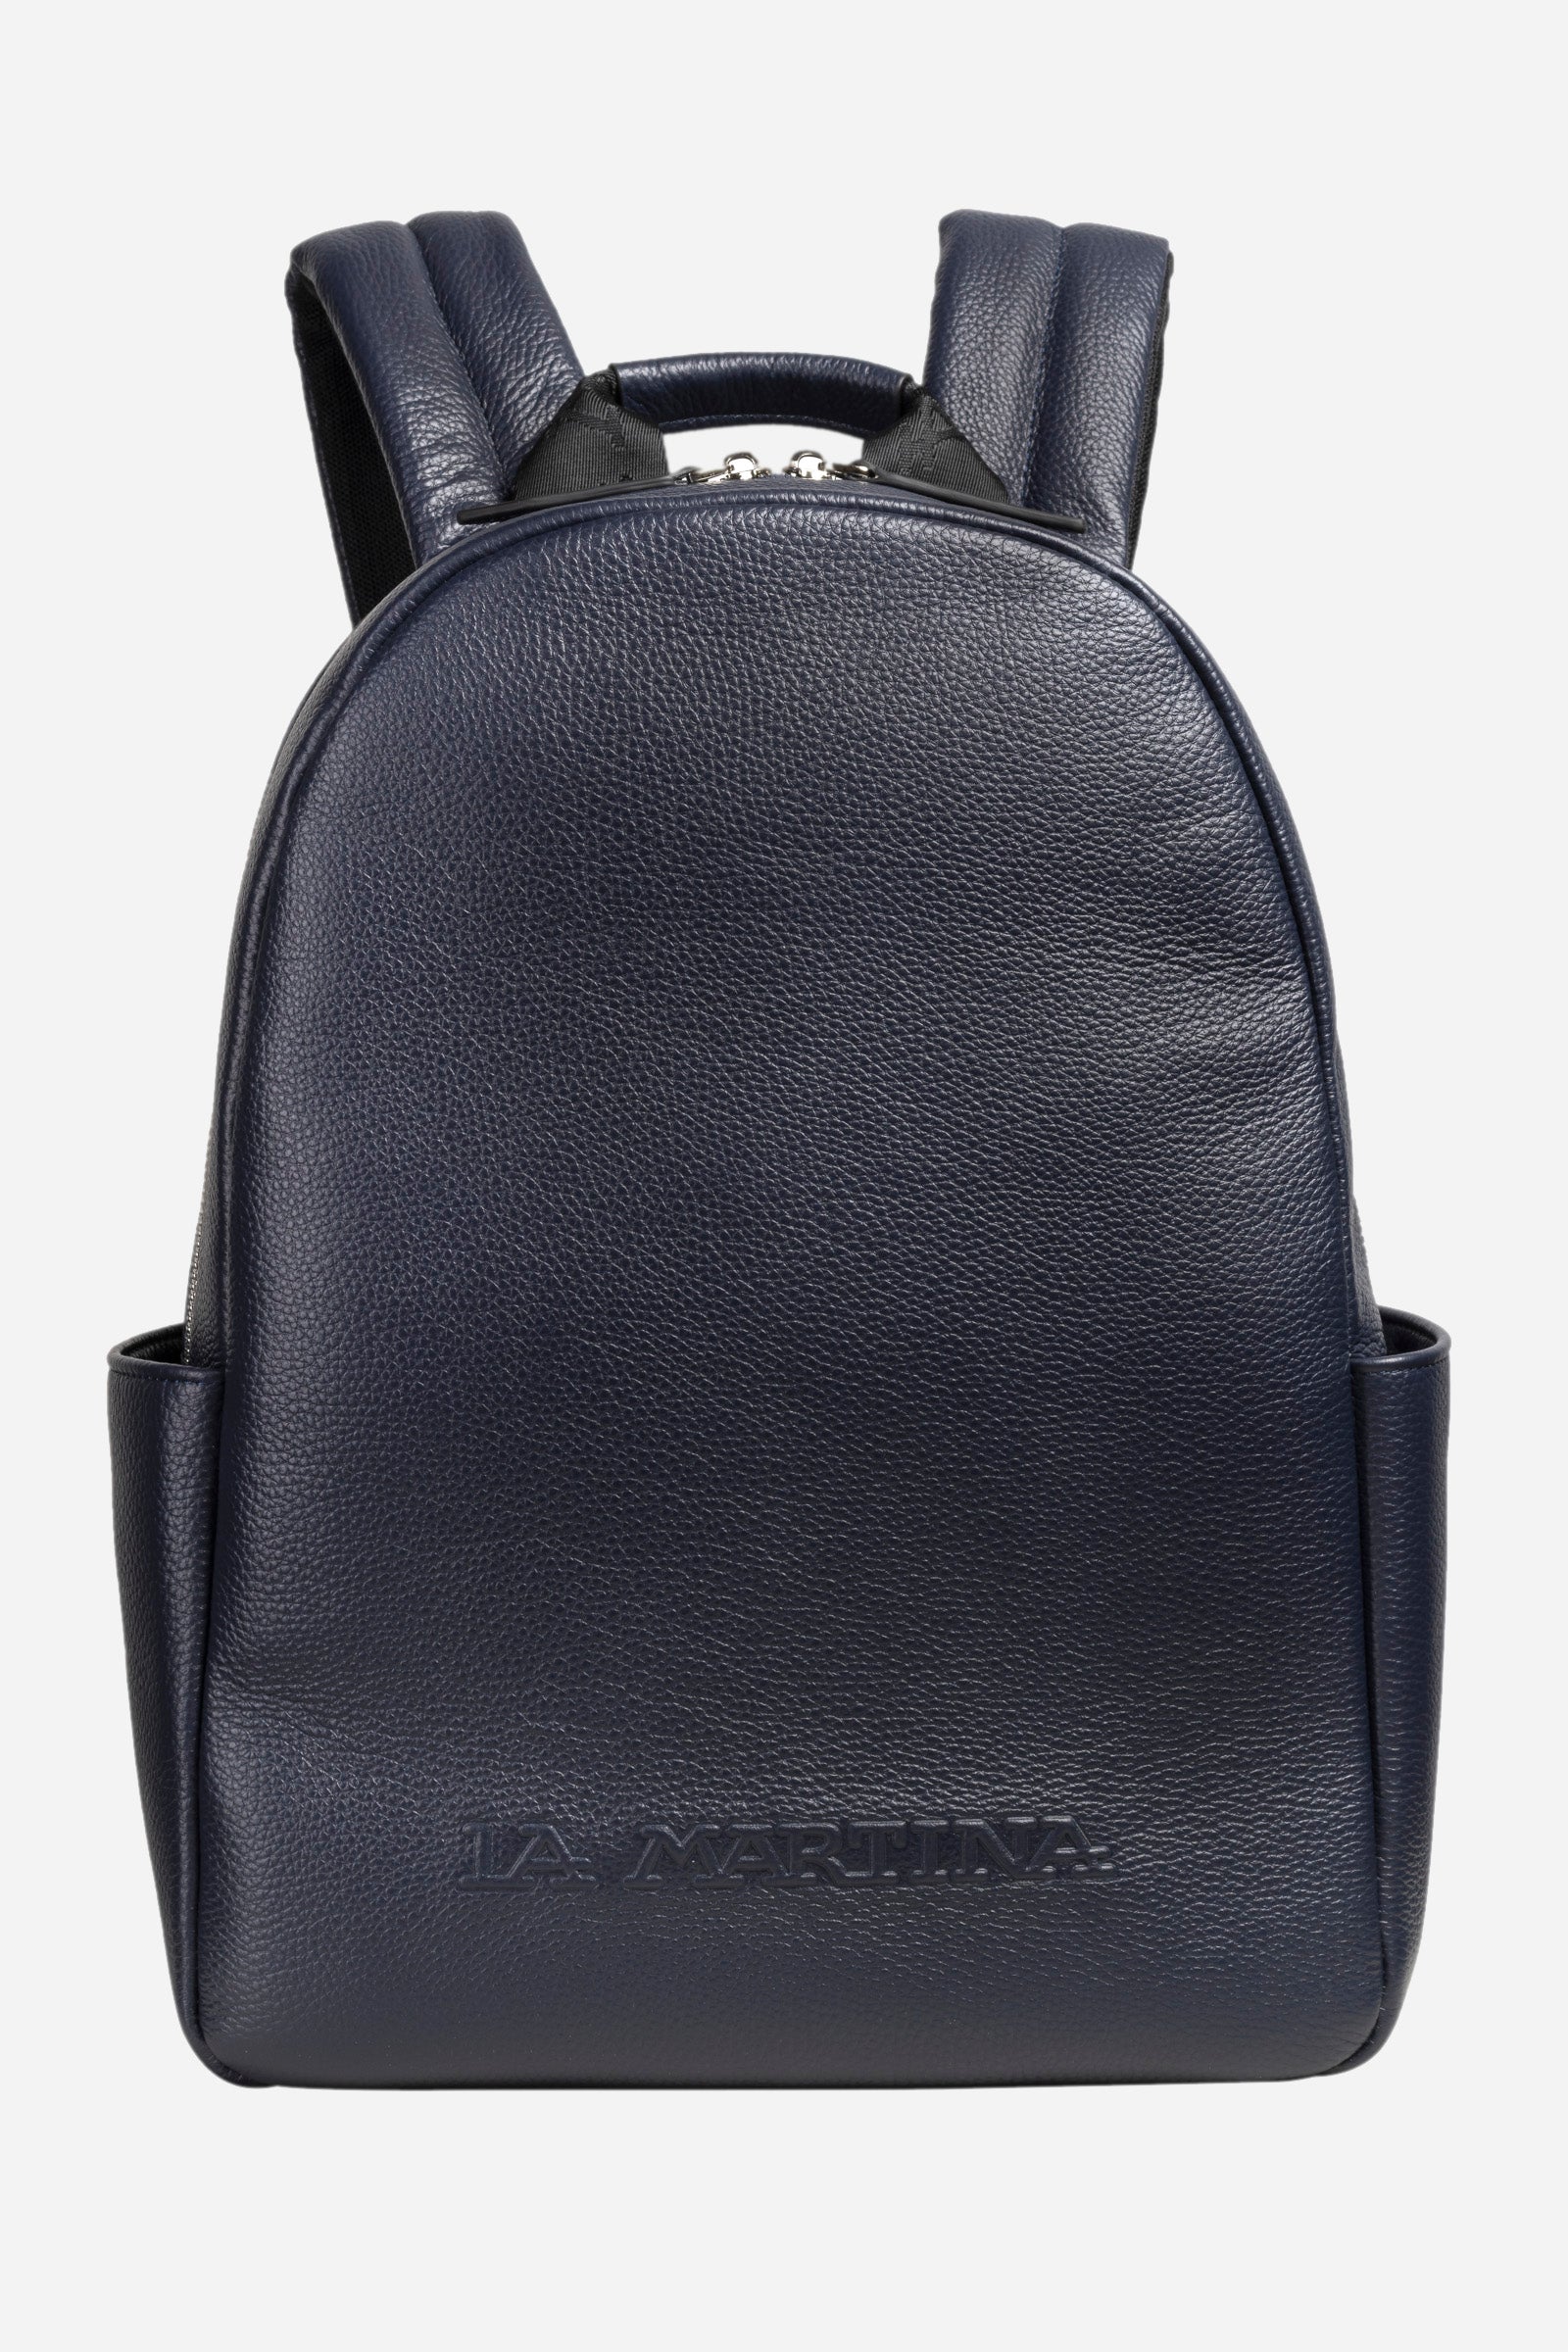 Men's leather backpack - Lorenzo